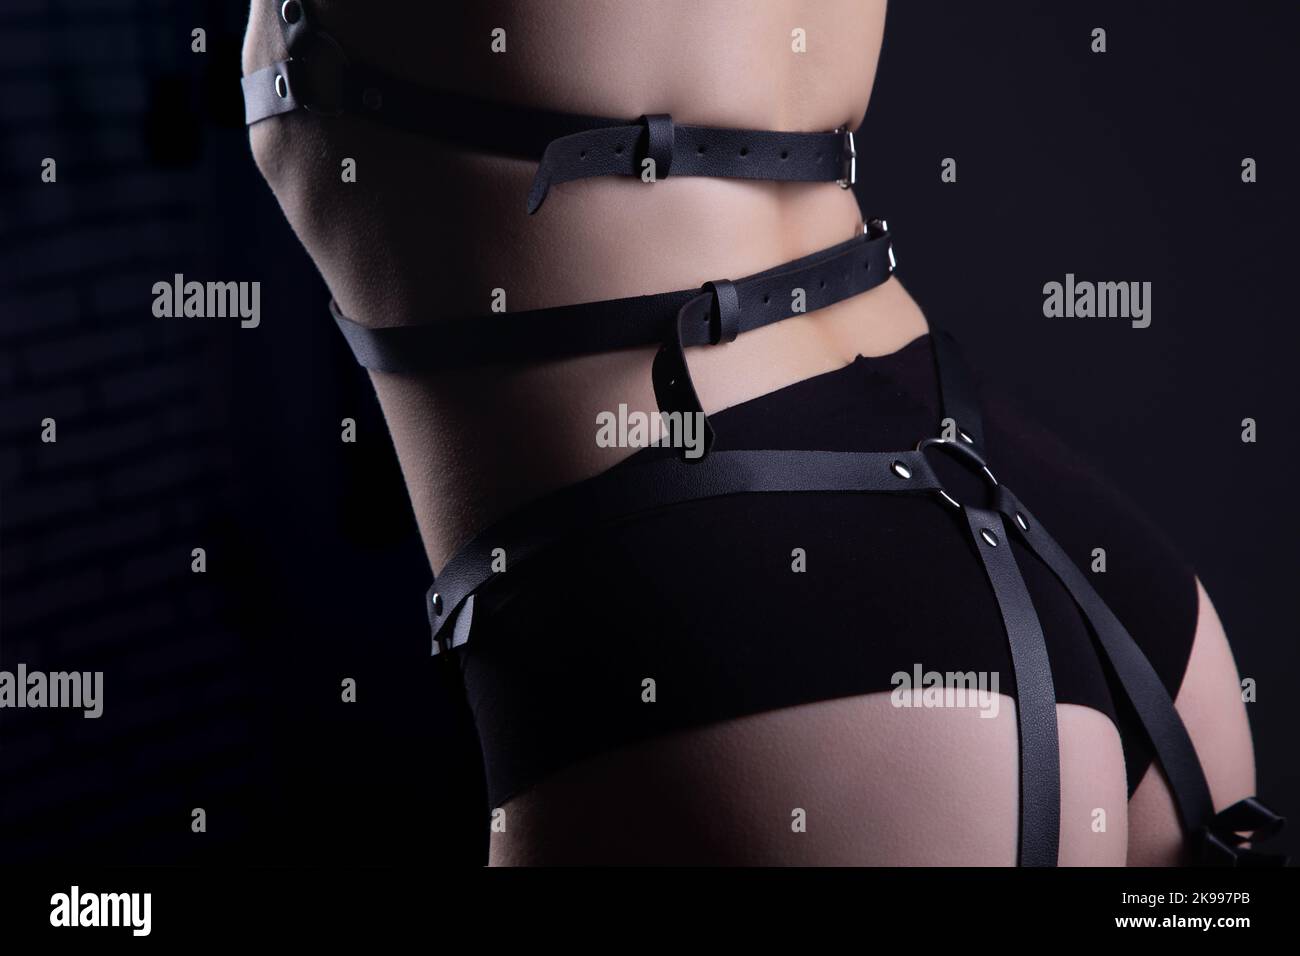 Photo of girls body in bdsm belt Stock Photo